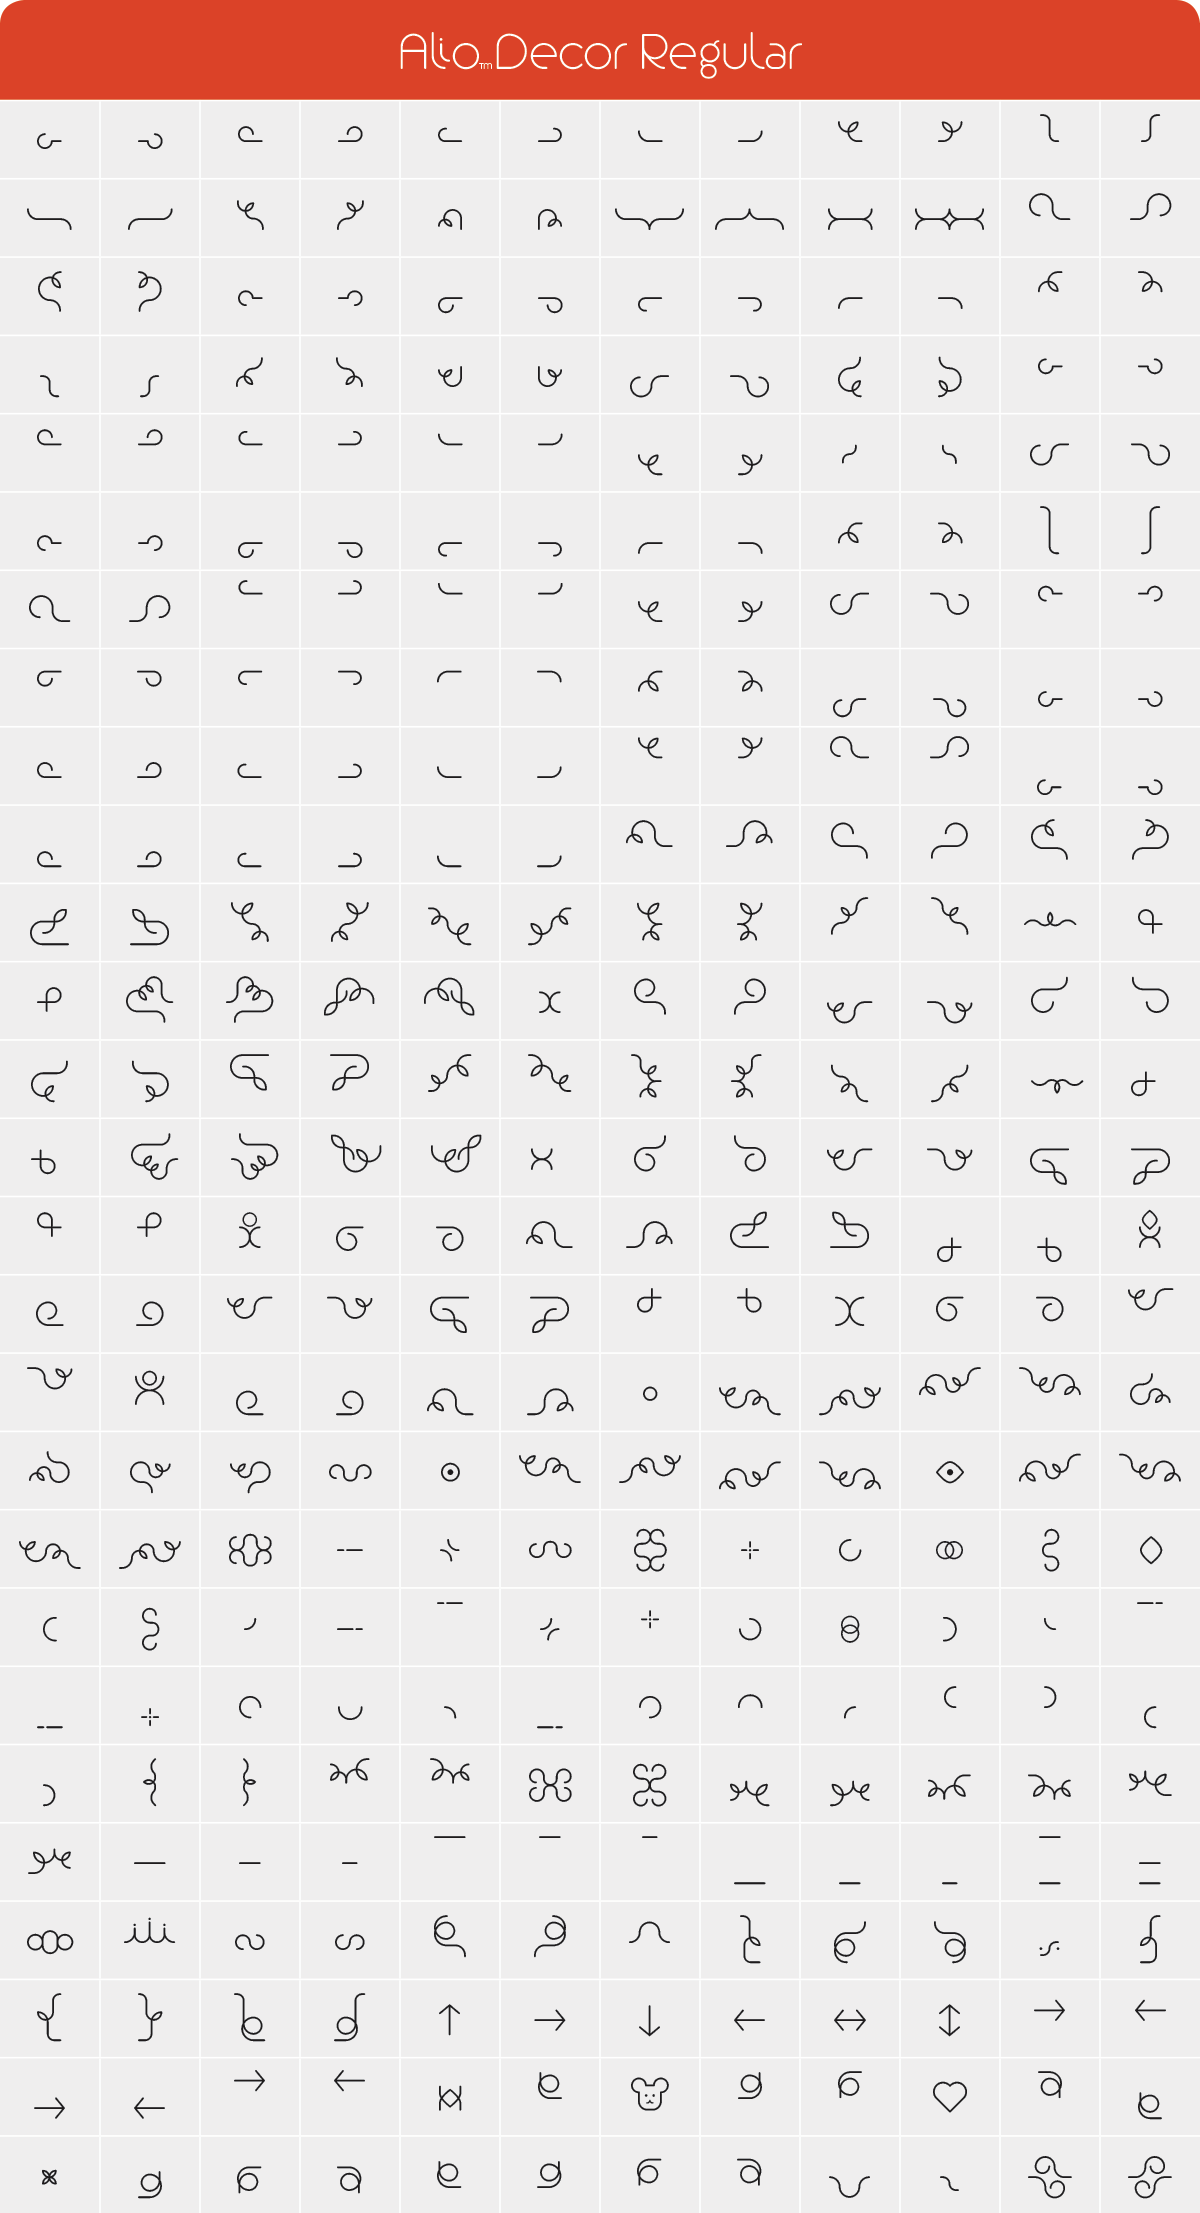 Alio Decor Regular Glyph Set